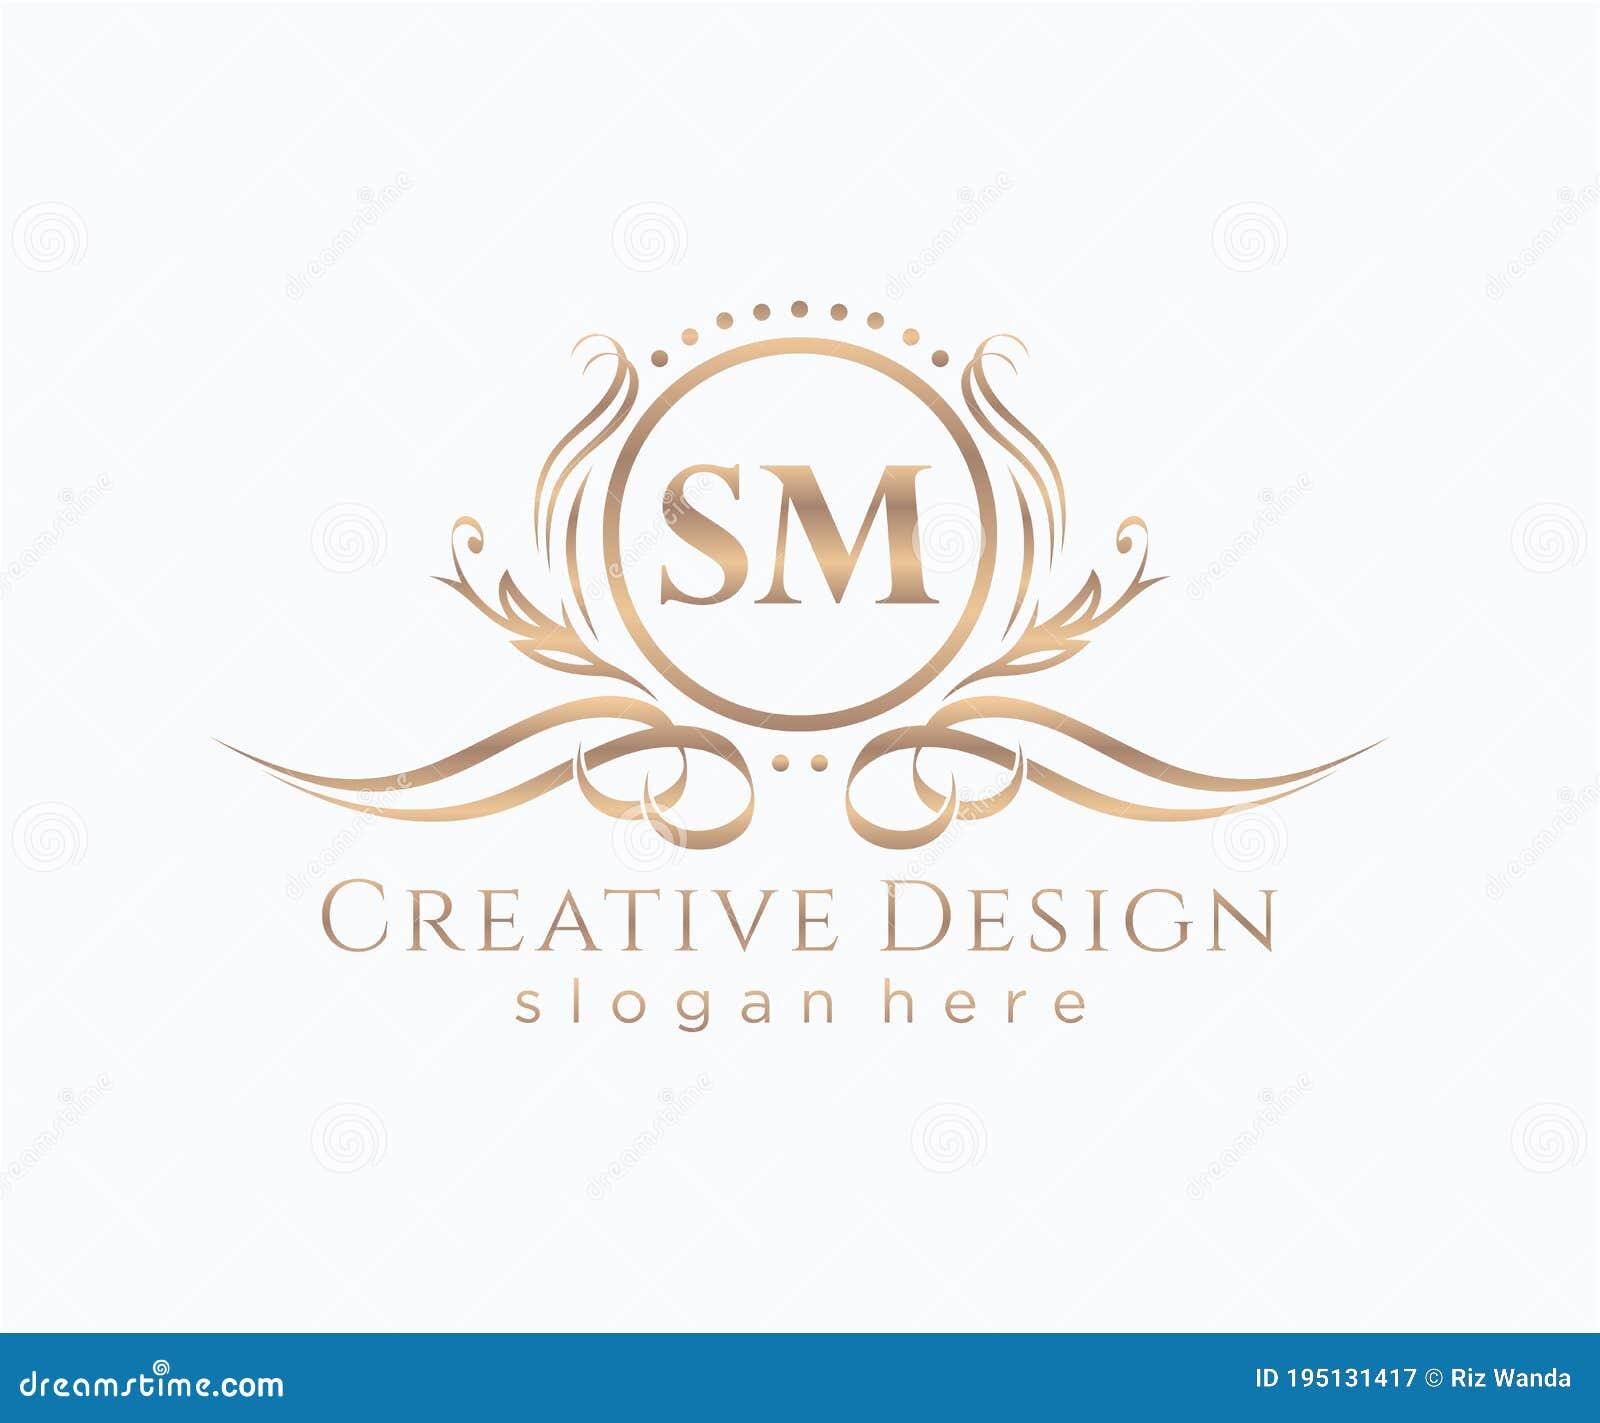 Elegant, Serious, Wedding Logo Design for M & M by adorachloe